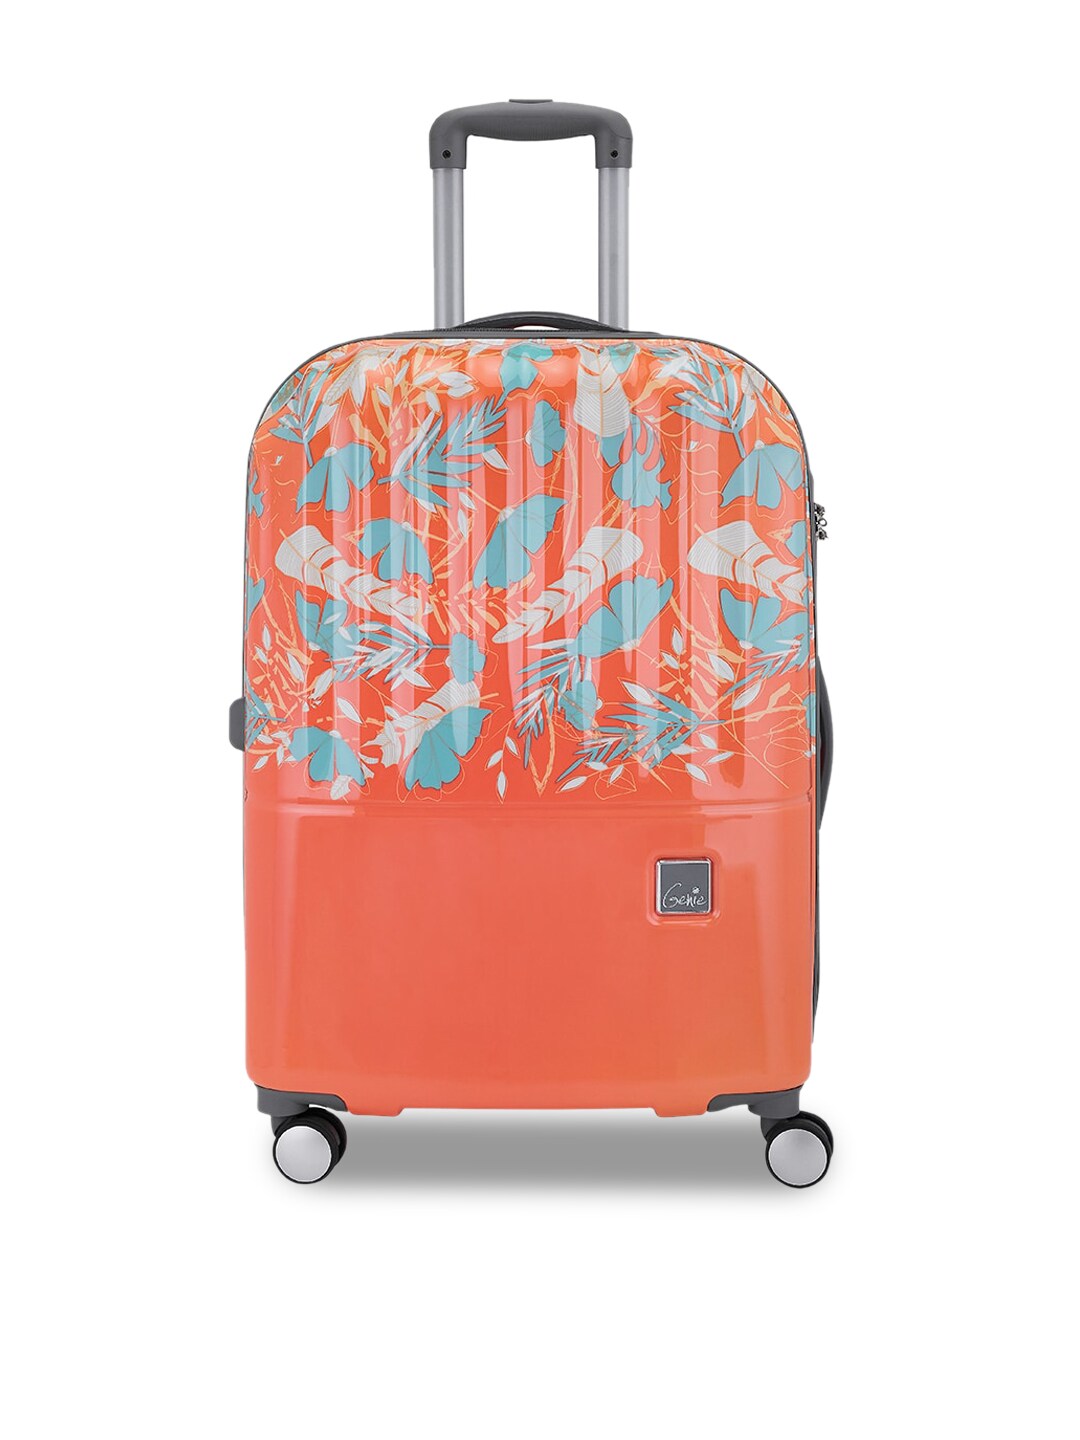 Genie Coral Printed Hard Sided Medium Trolley Suitcase Price in India